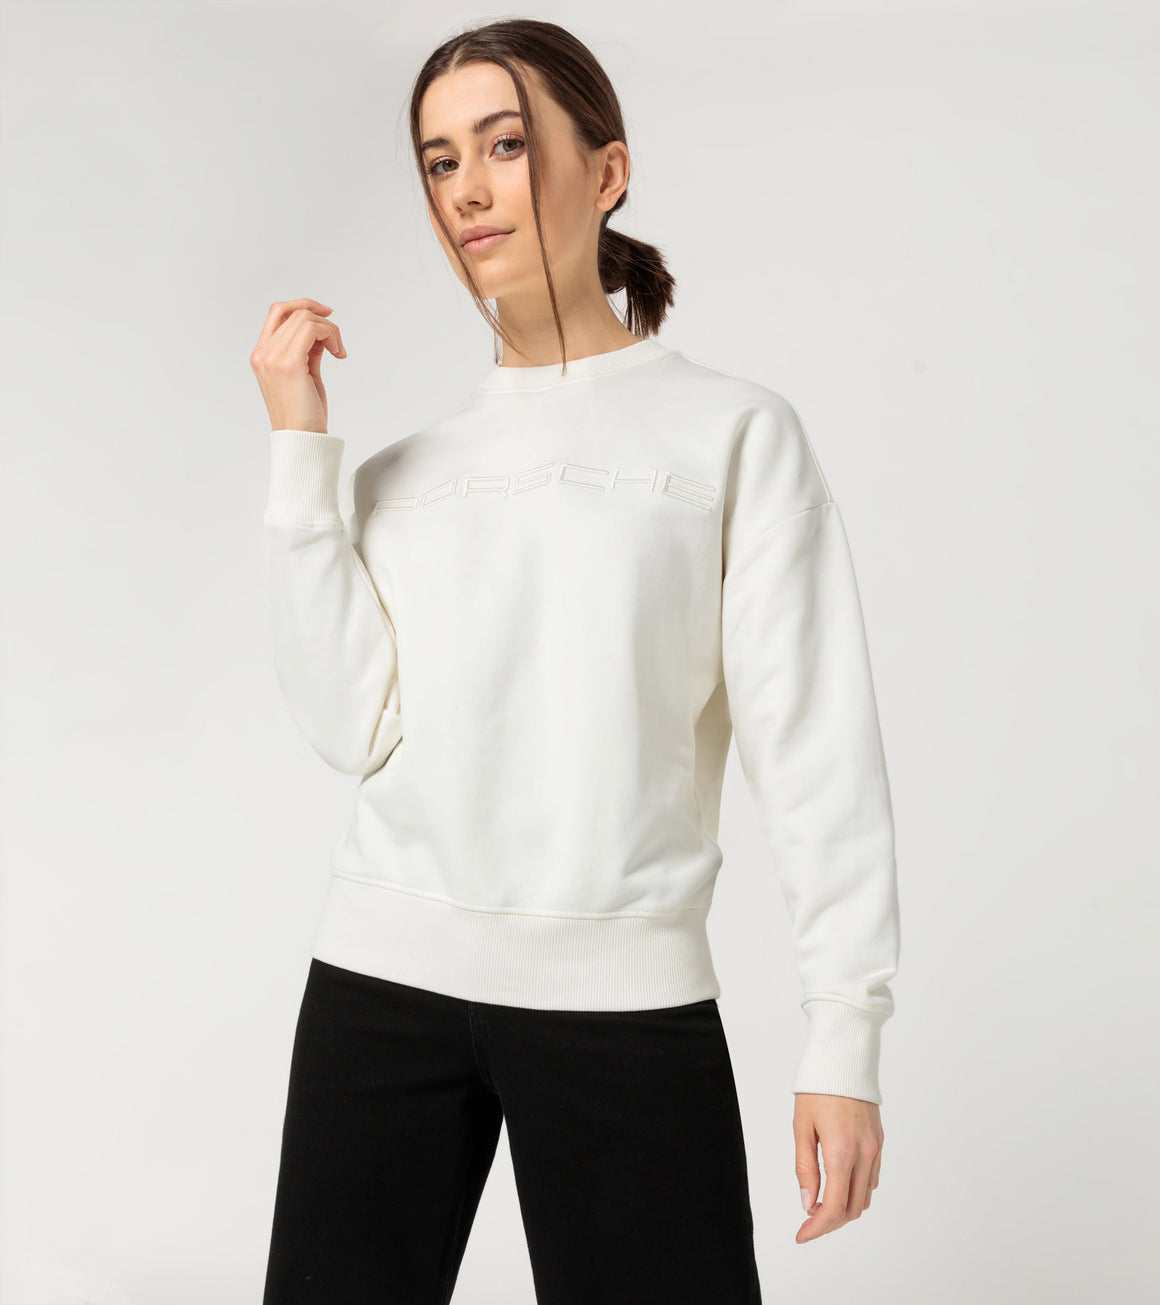 Essential women's sweater